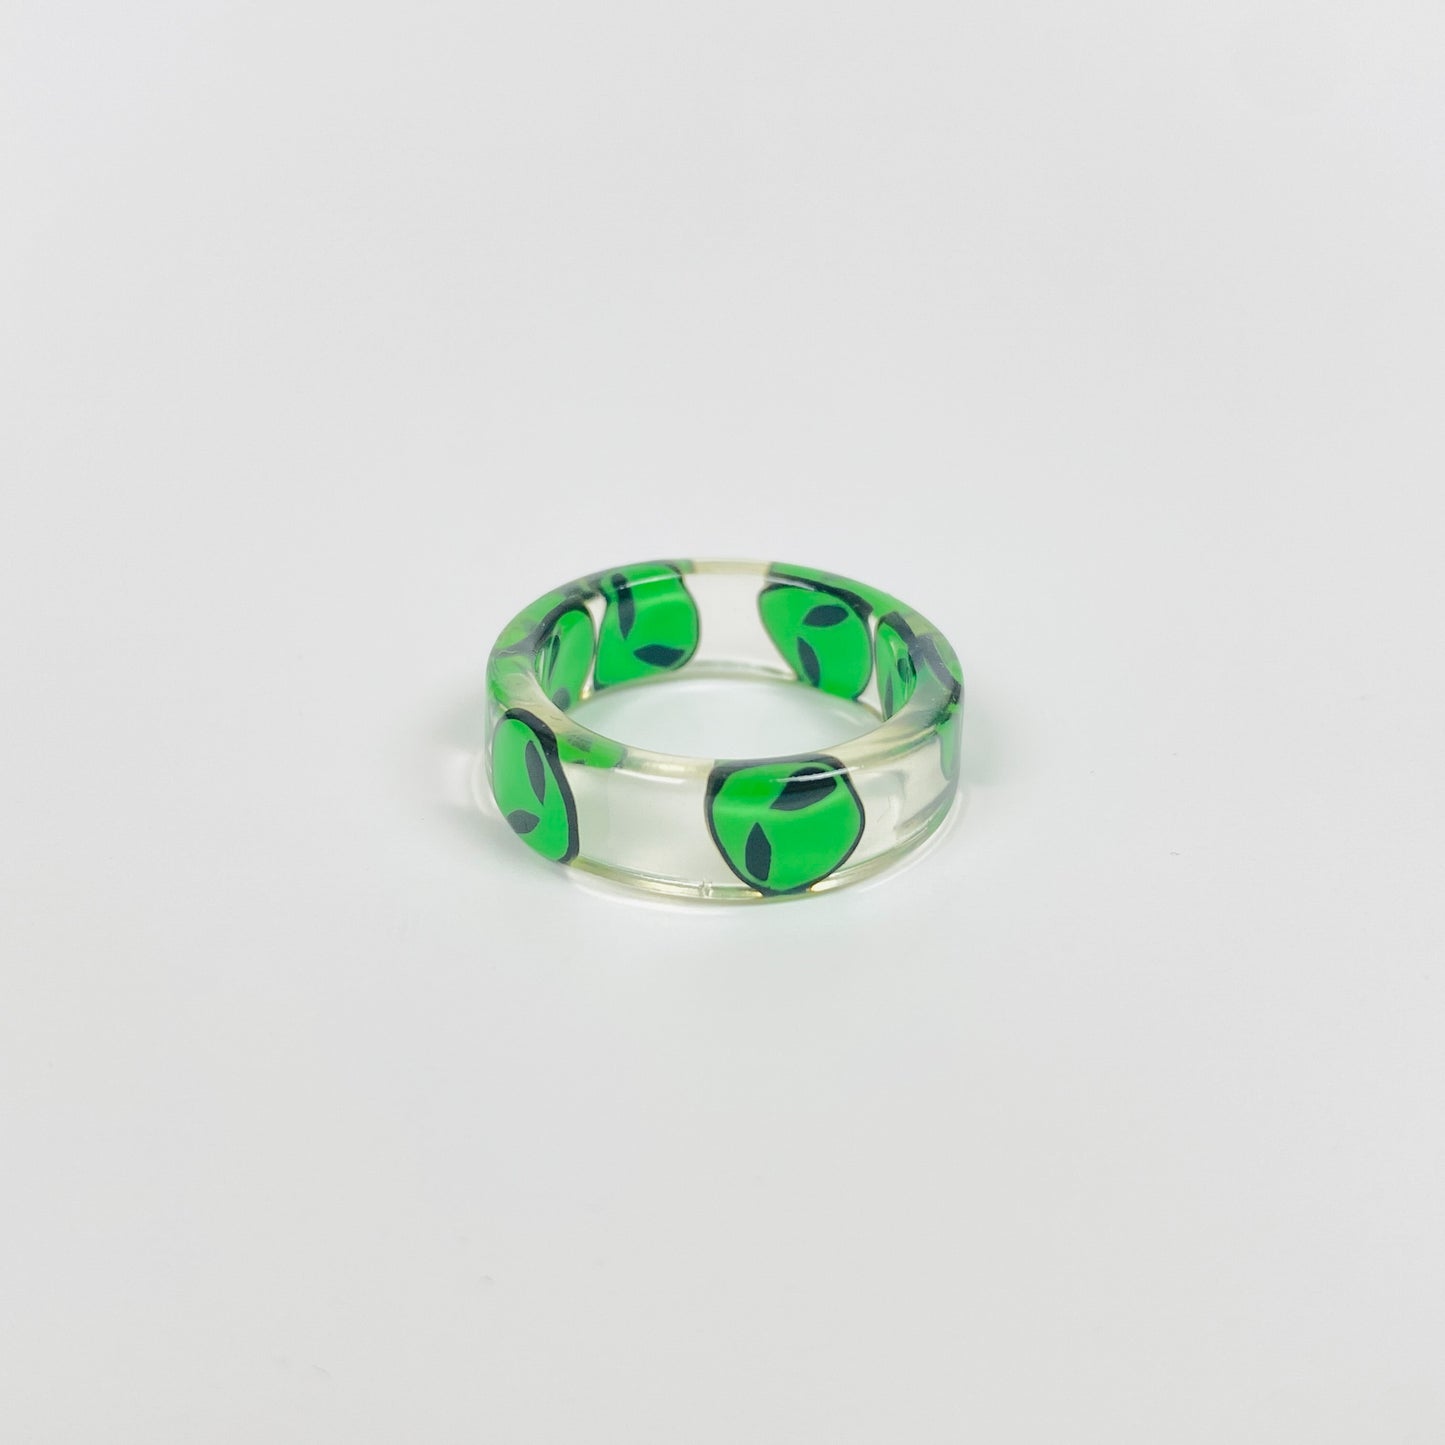 Vintage Retro Alien Resin Ring Green